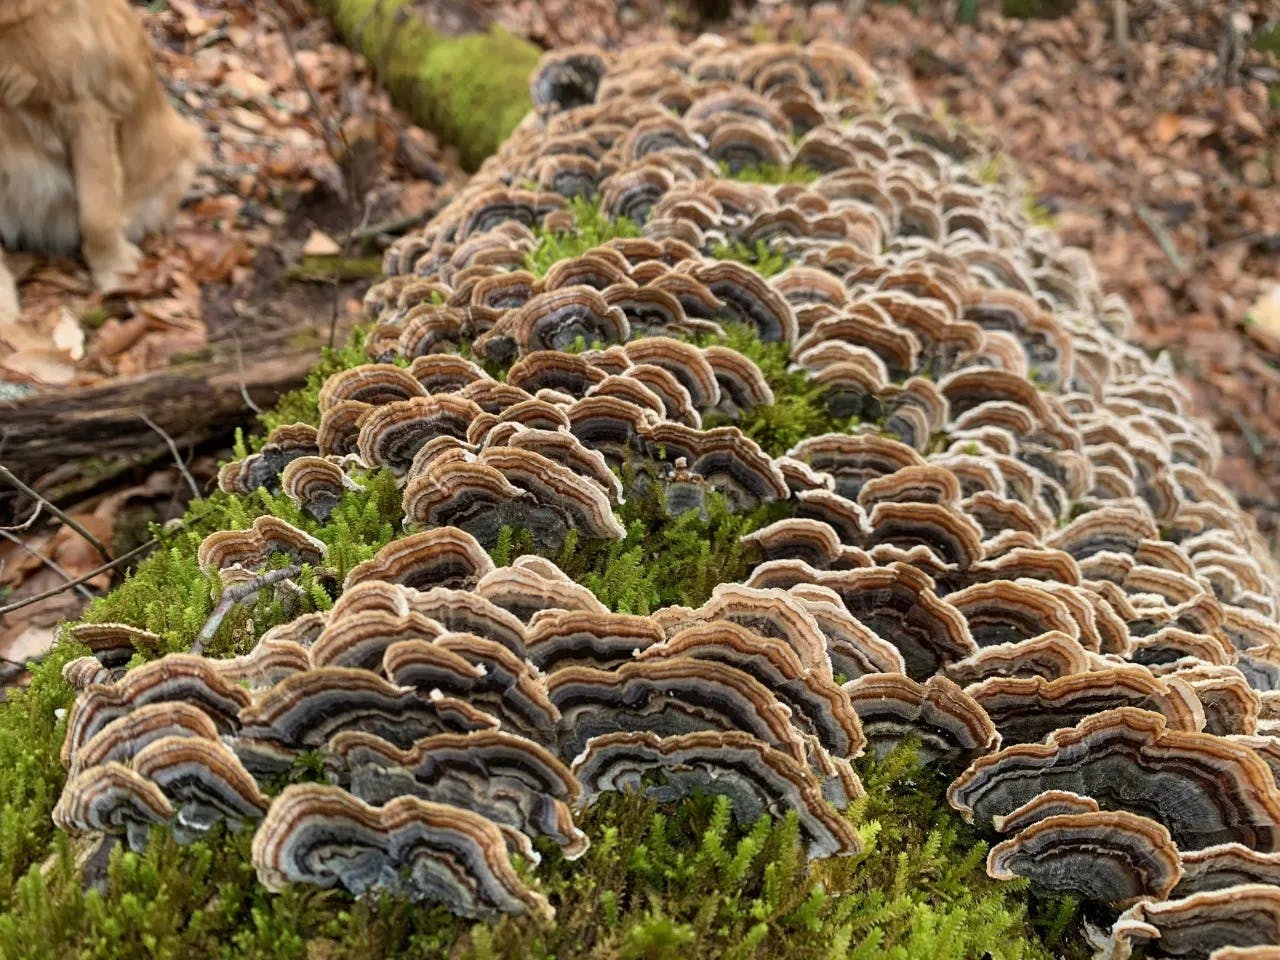 Turkey tail mushrooms growing on a log